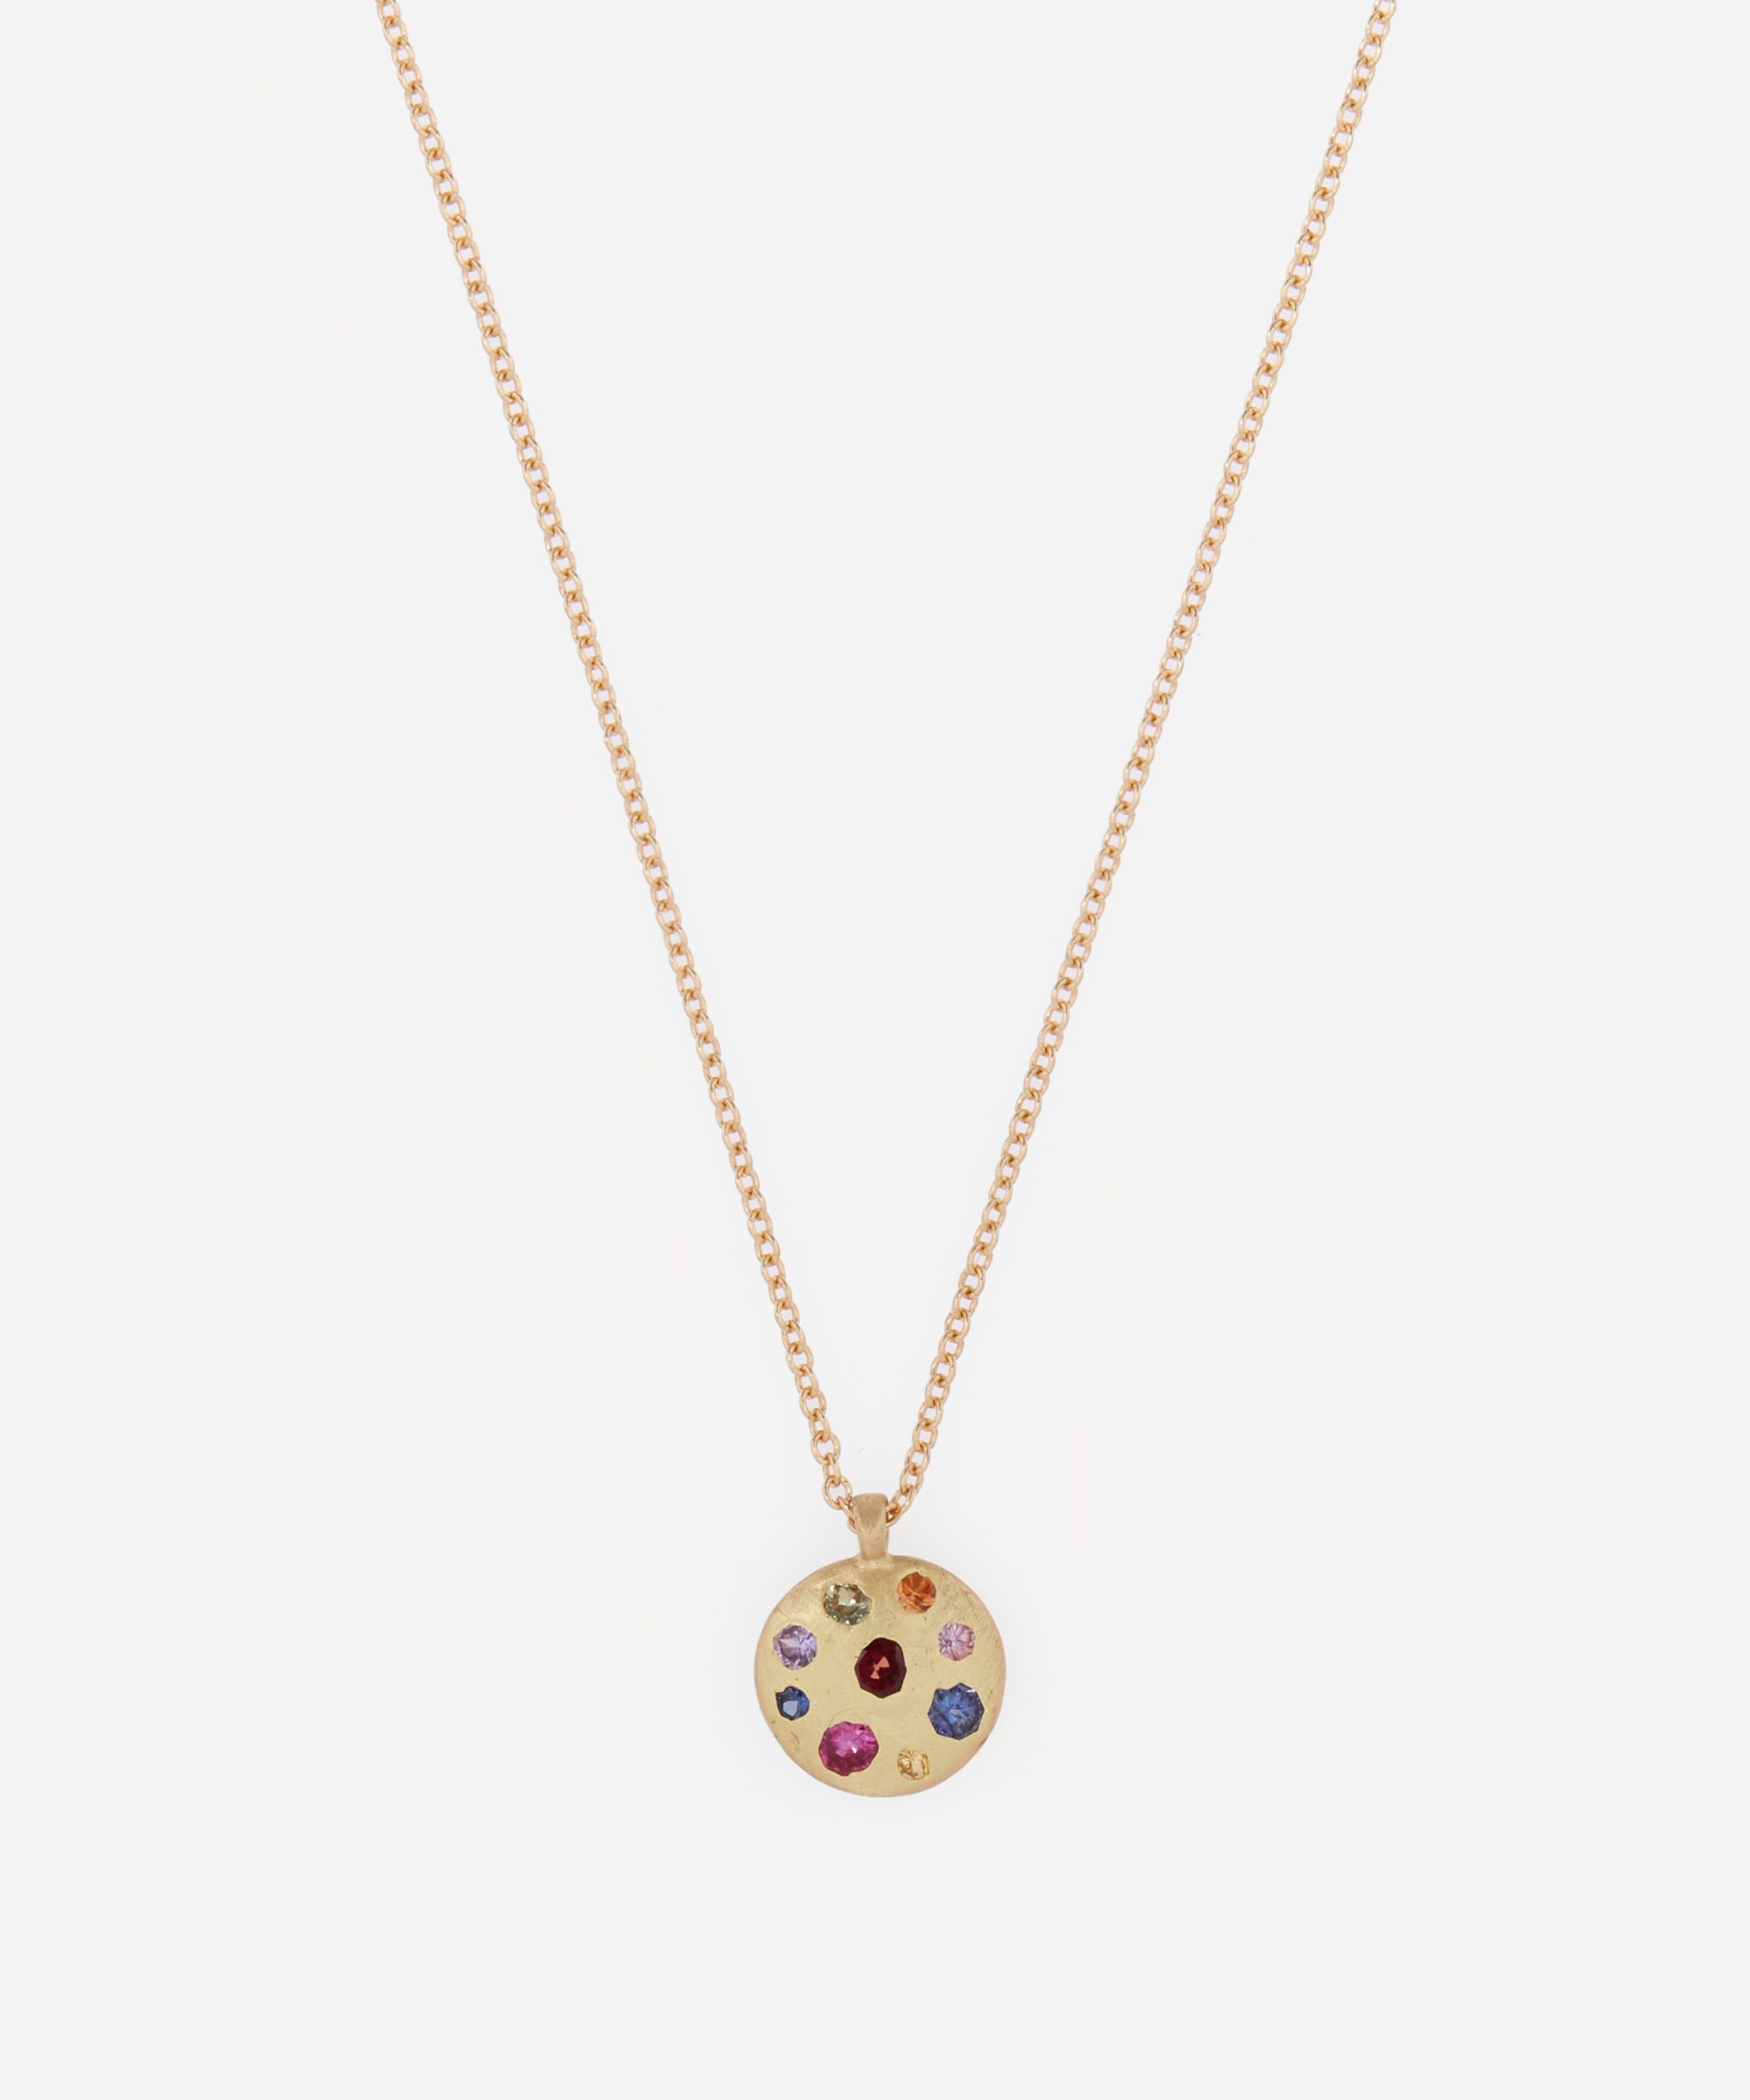 Polly Wales - 18ct Gold Celeste Medium Rainbow Sapphire Disc Pendant Necklace